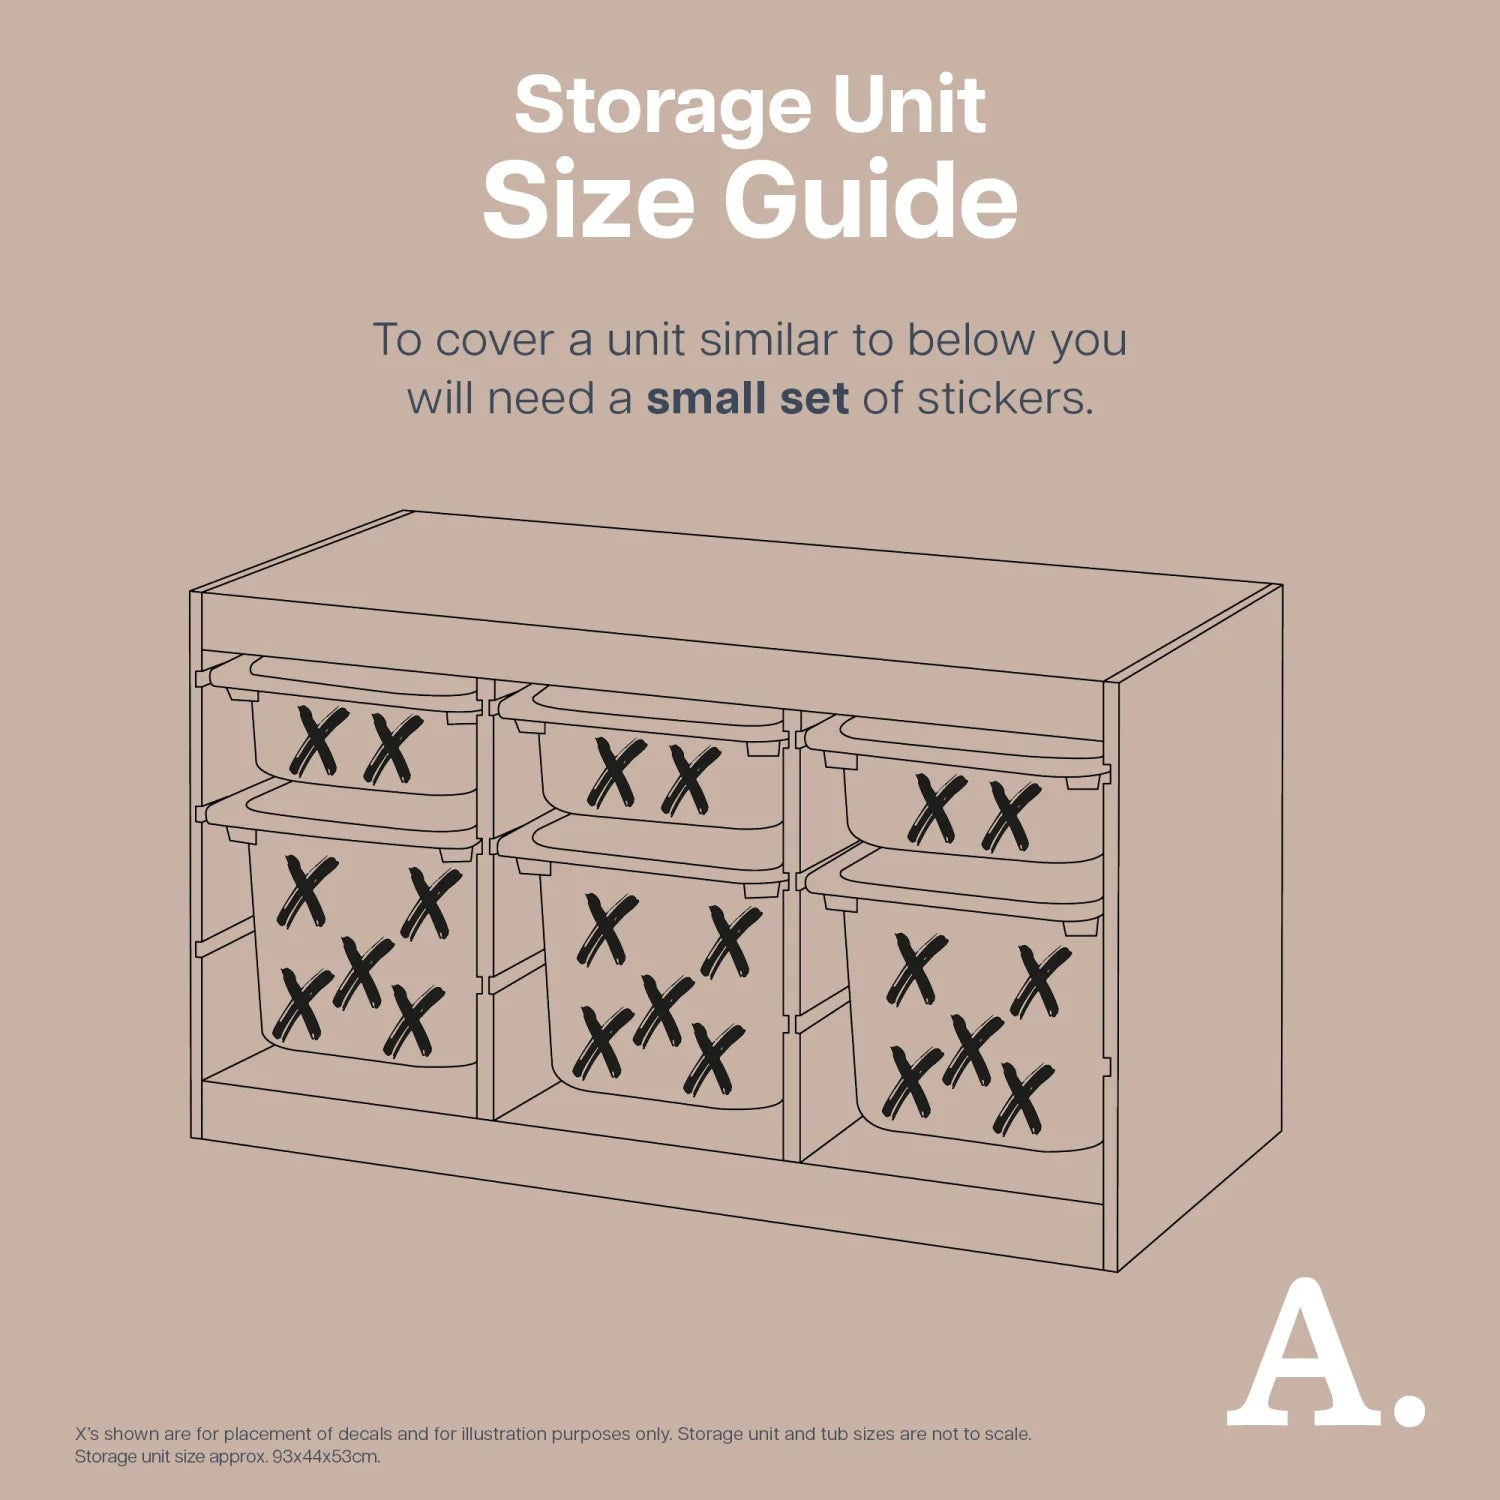 Straight Abstracts Warm - Storage Tub Decals Organisational